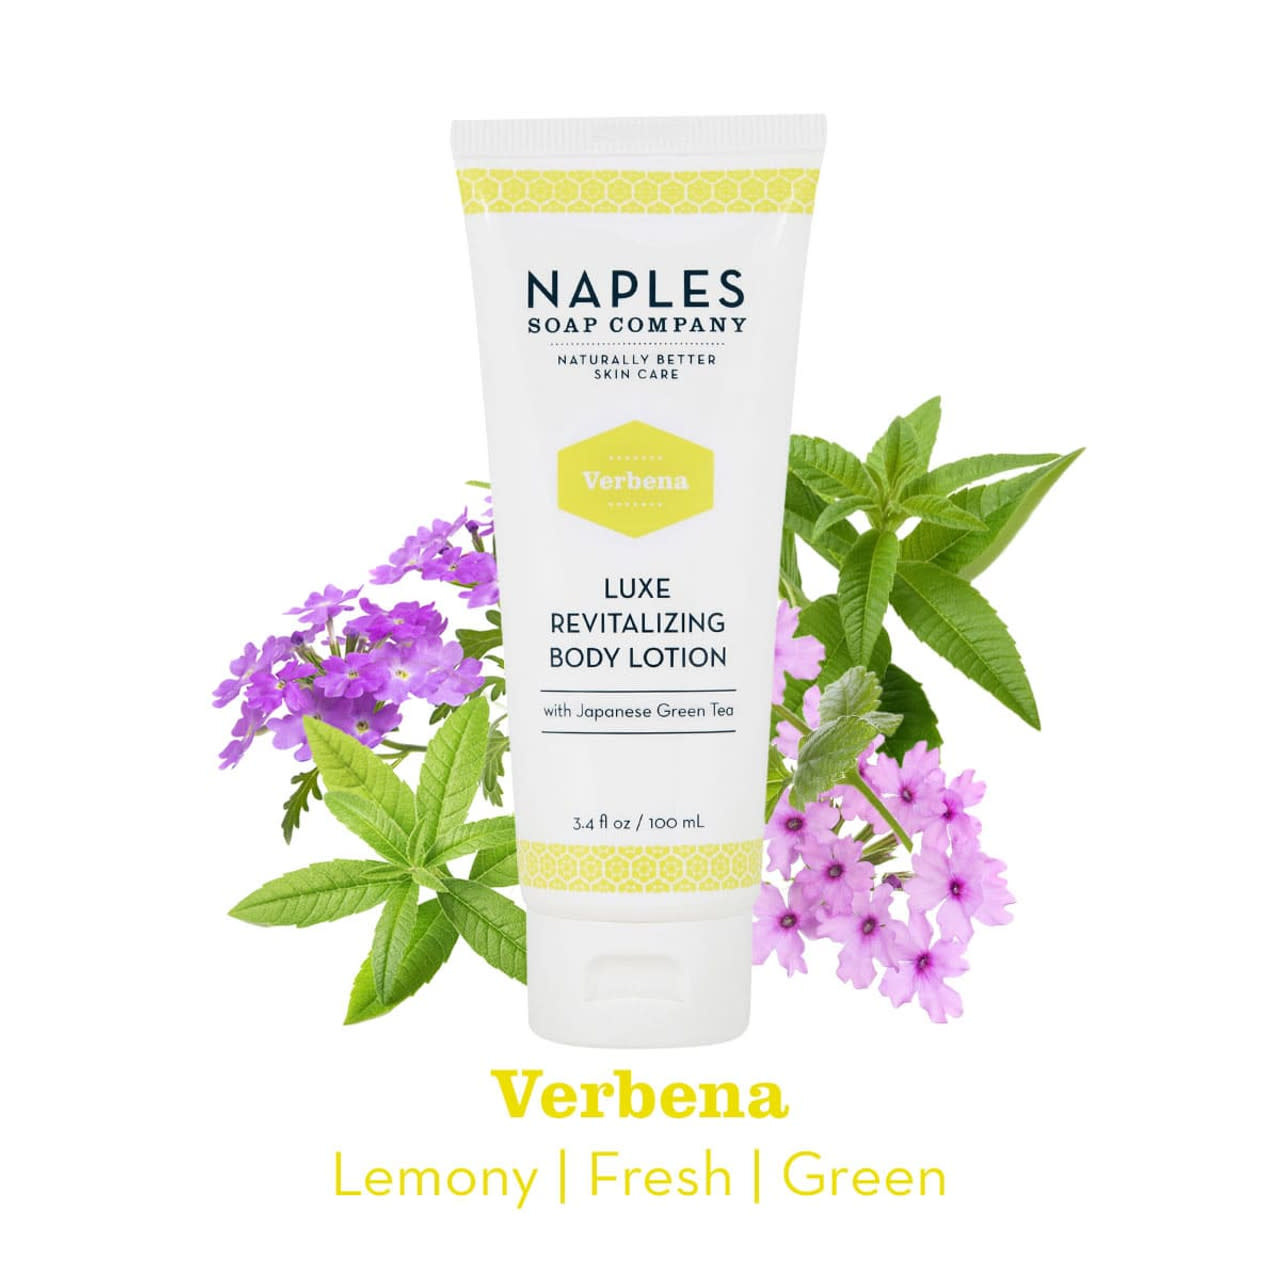 Naples Soap Co. Verbena Luxe Hand & Body Lotion 3.4 oz